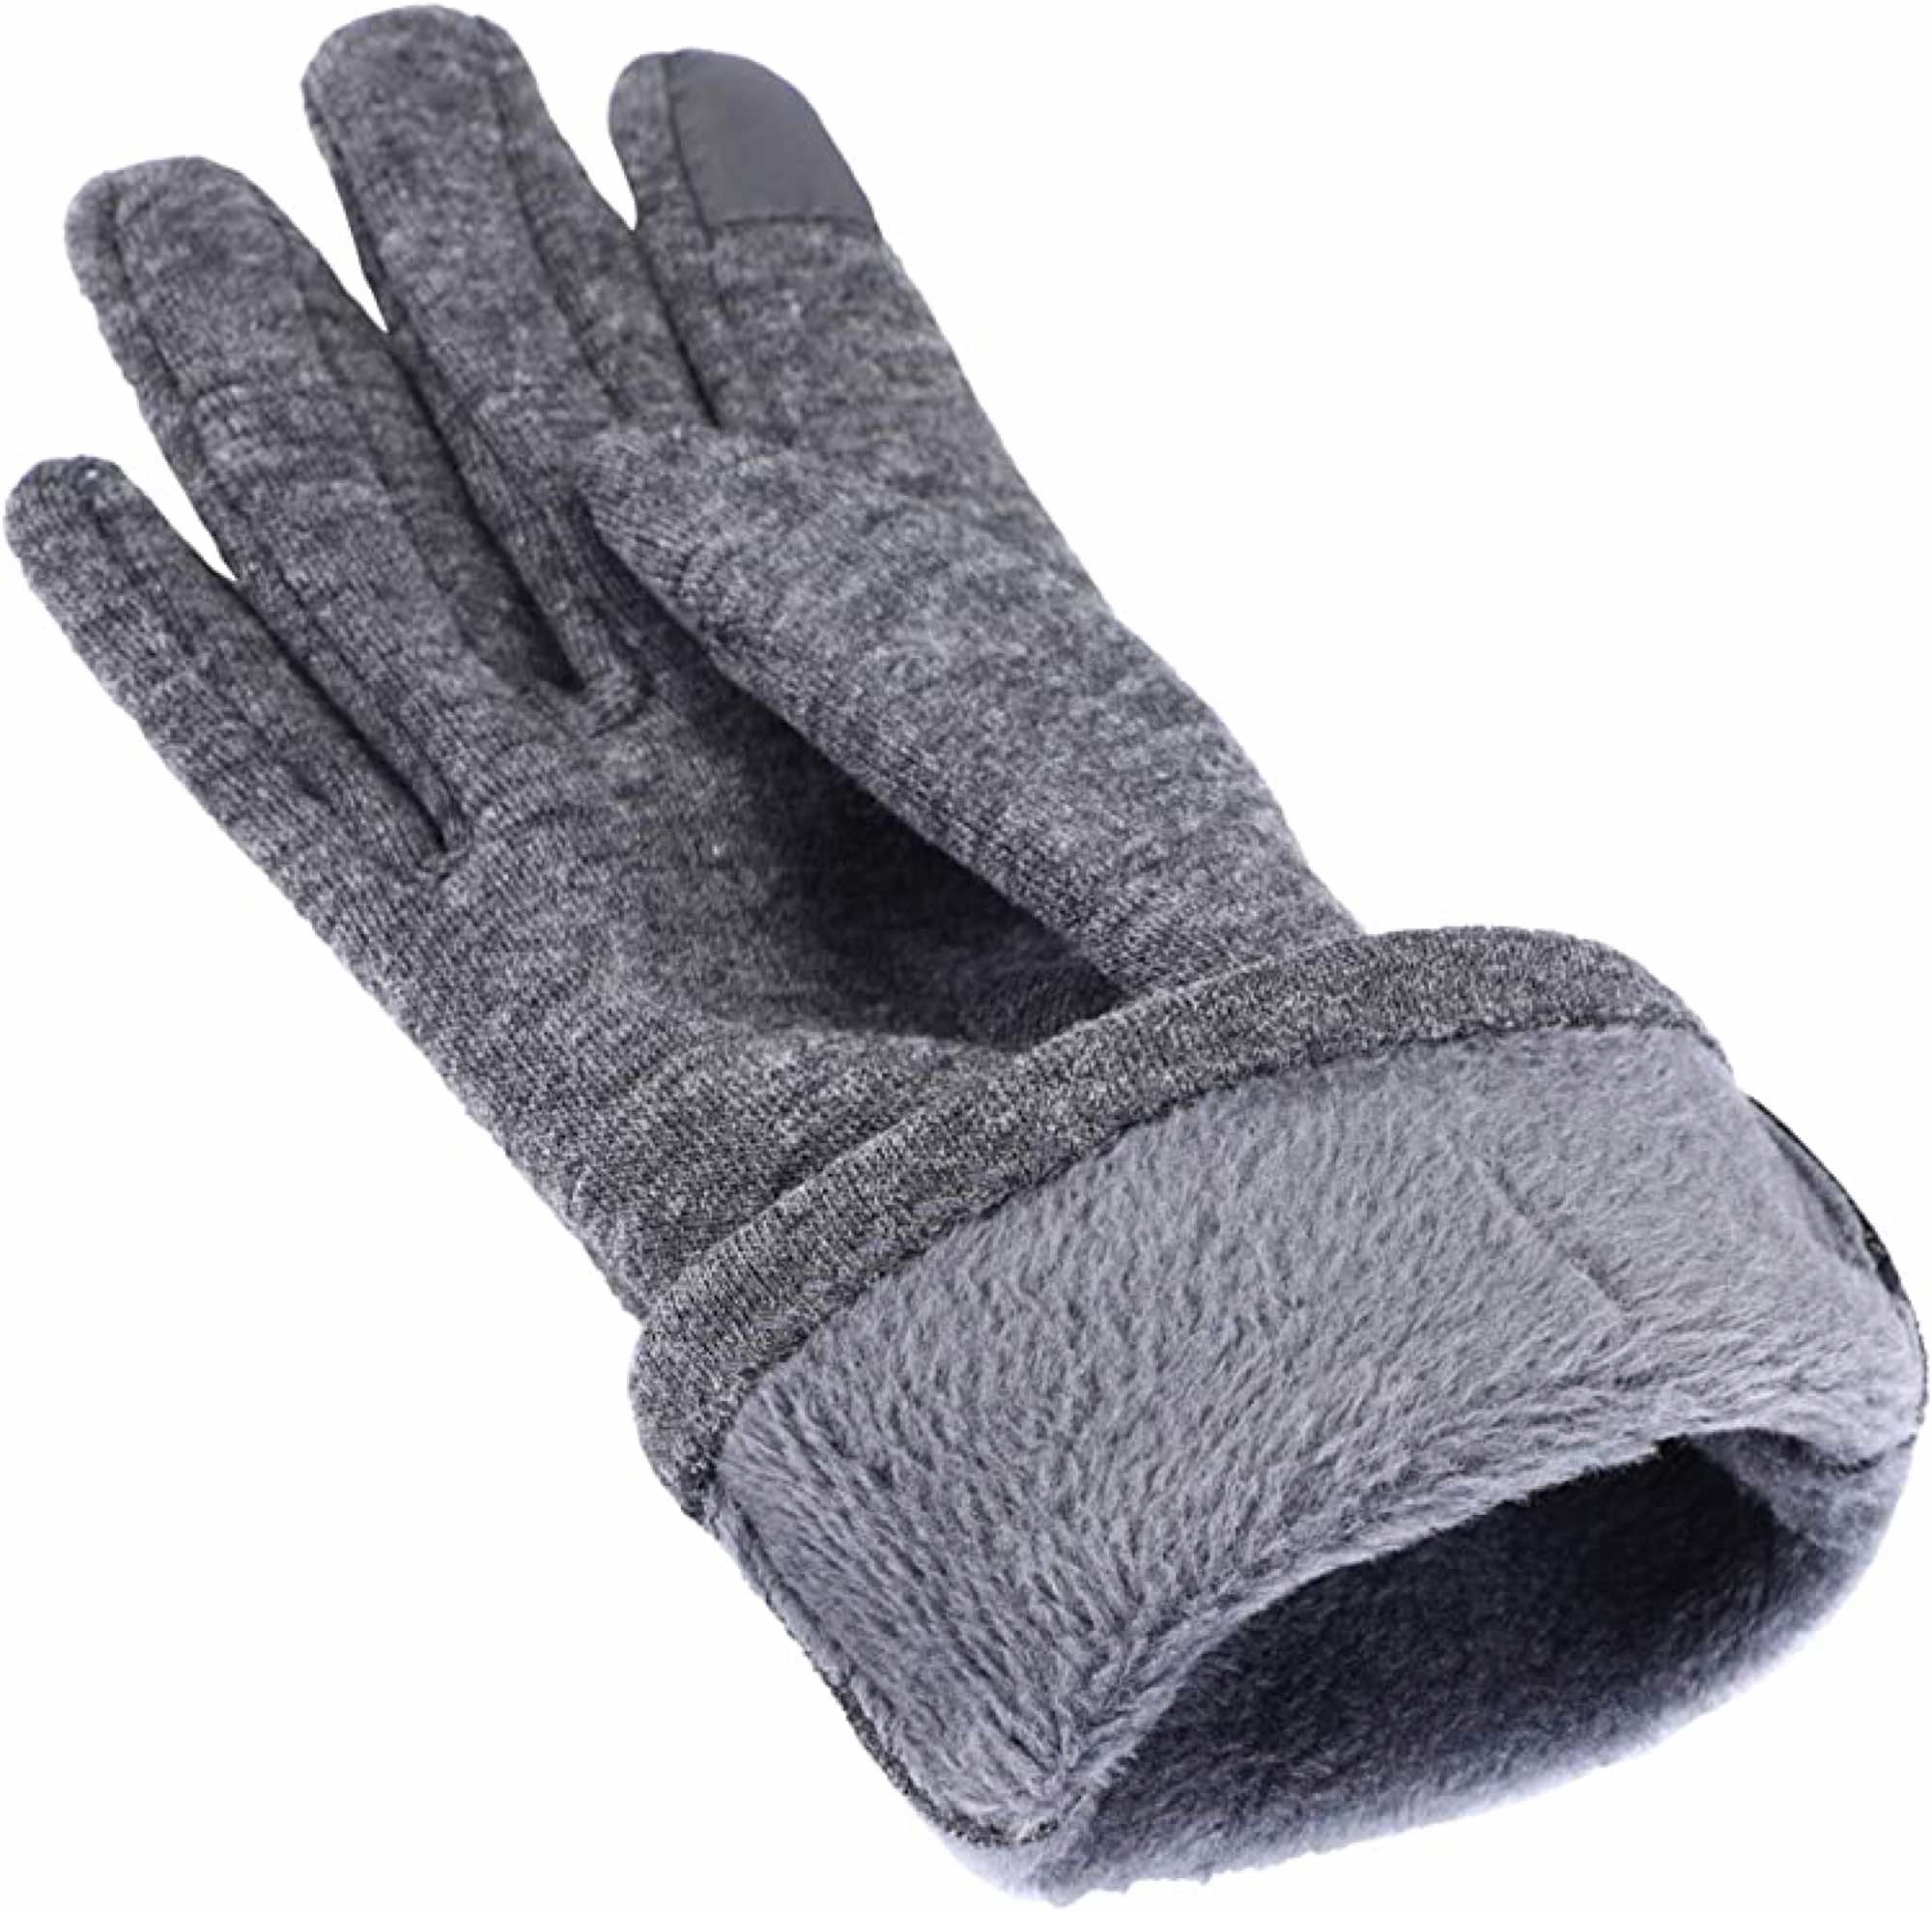 Damenhandschuhe für den Winter - Geeignet für Touchscreens - Warmes Fleece Futter - Einheitsgröße - Grau-8